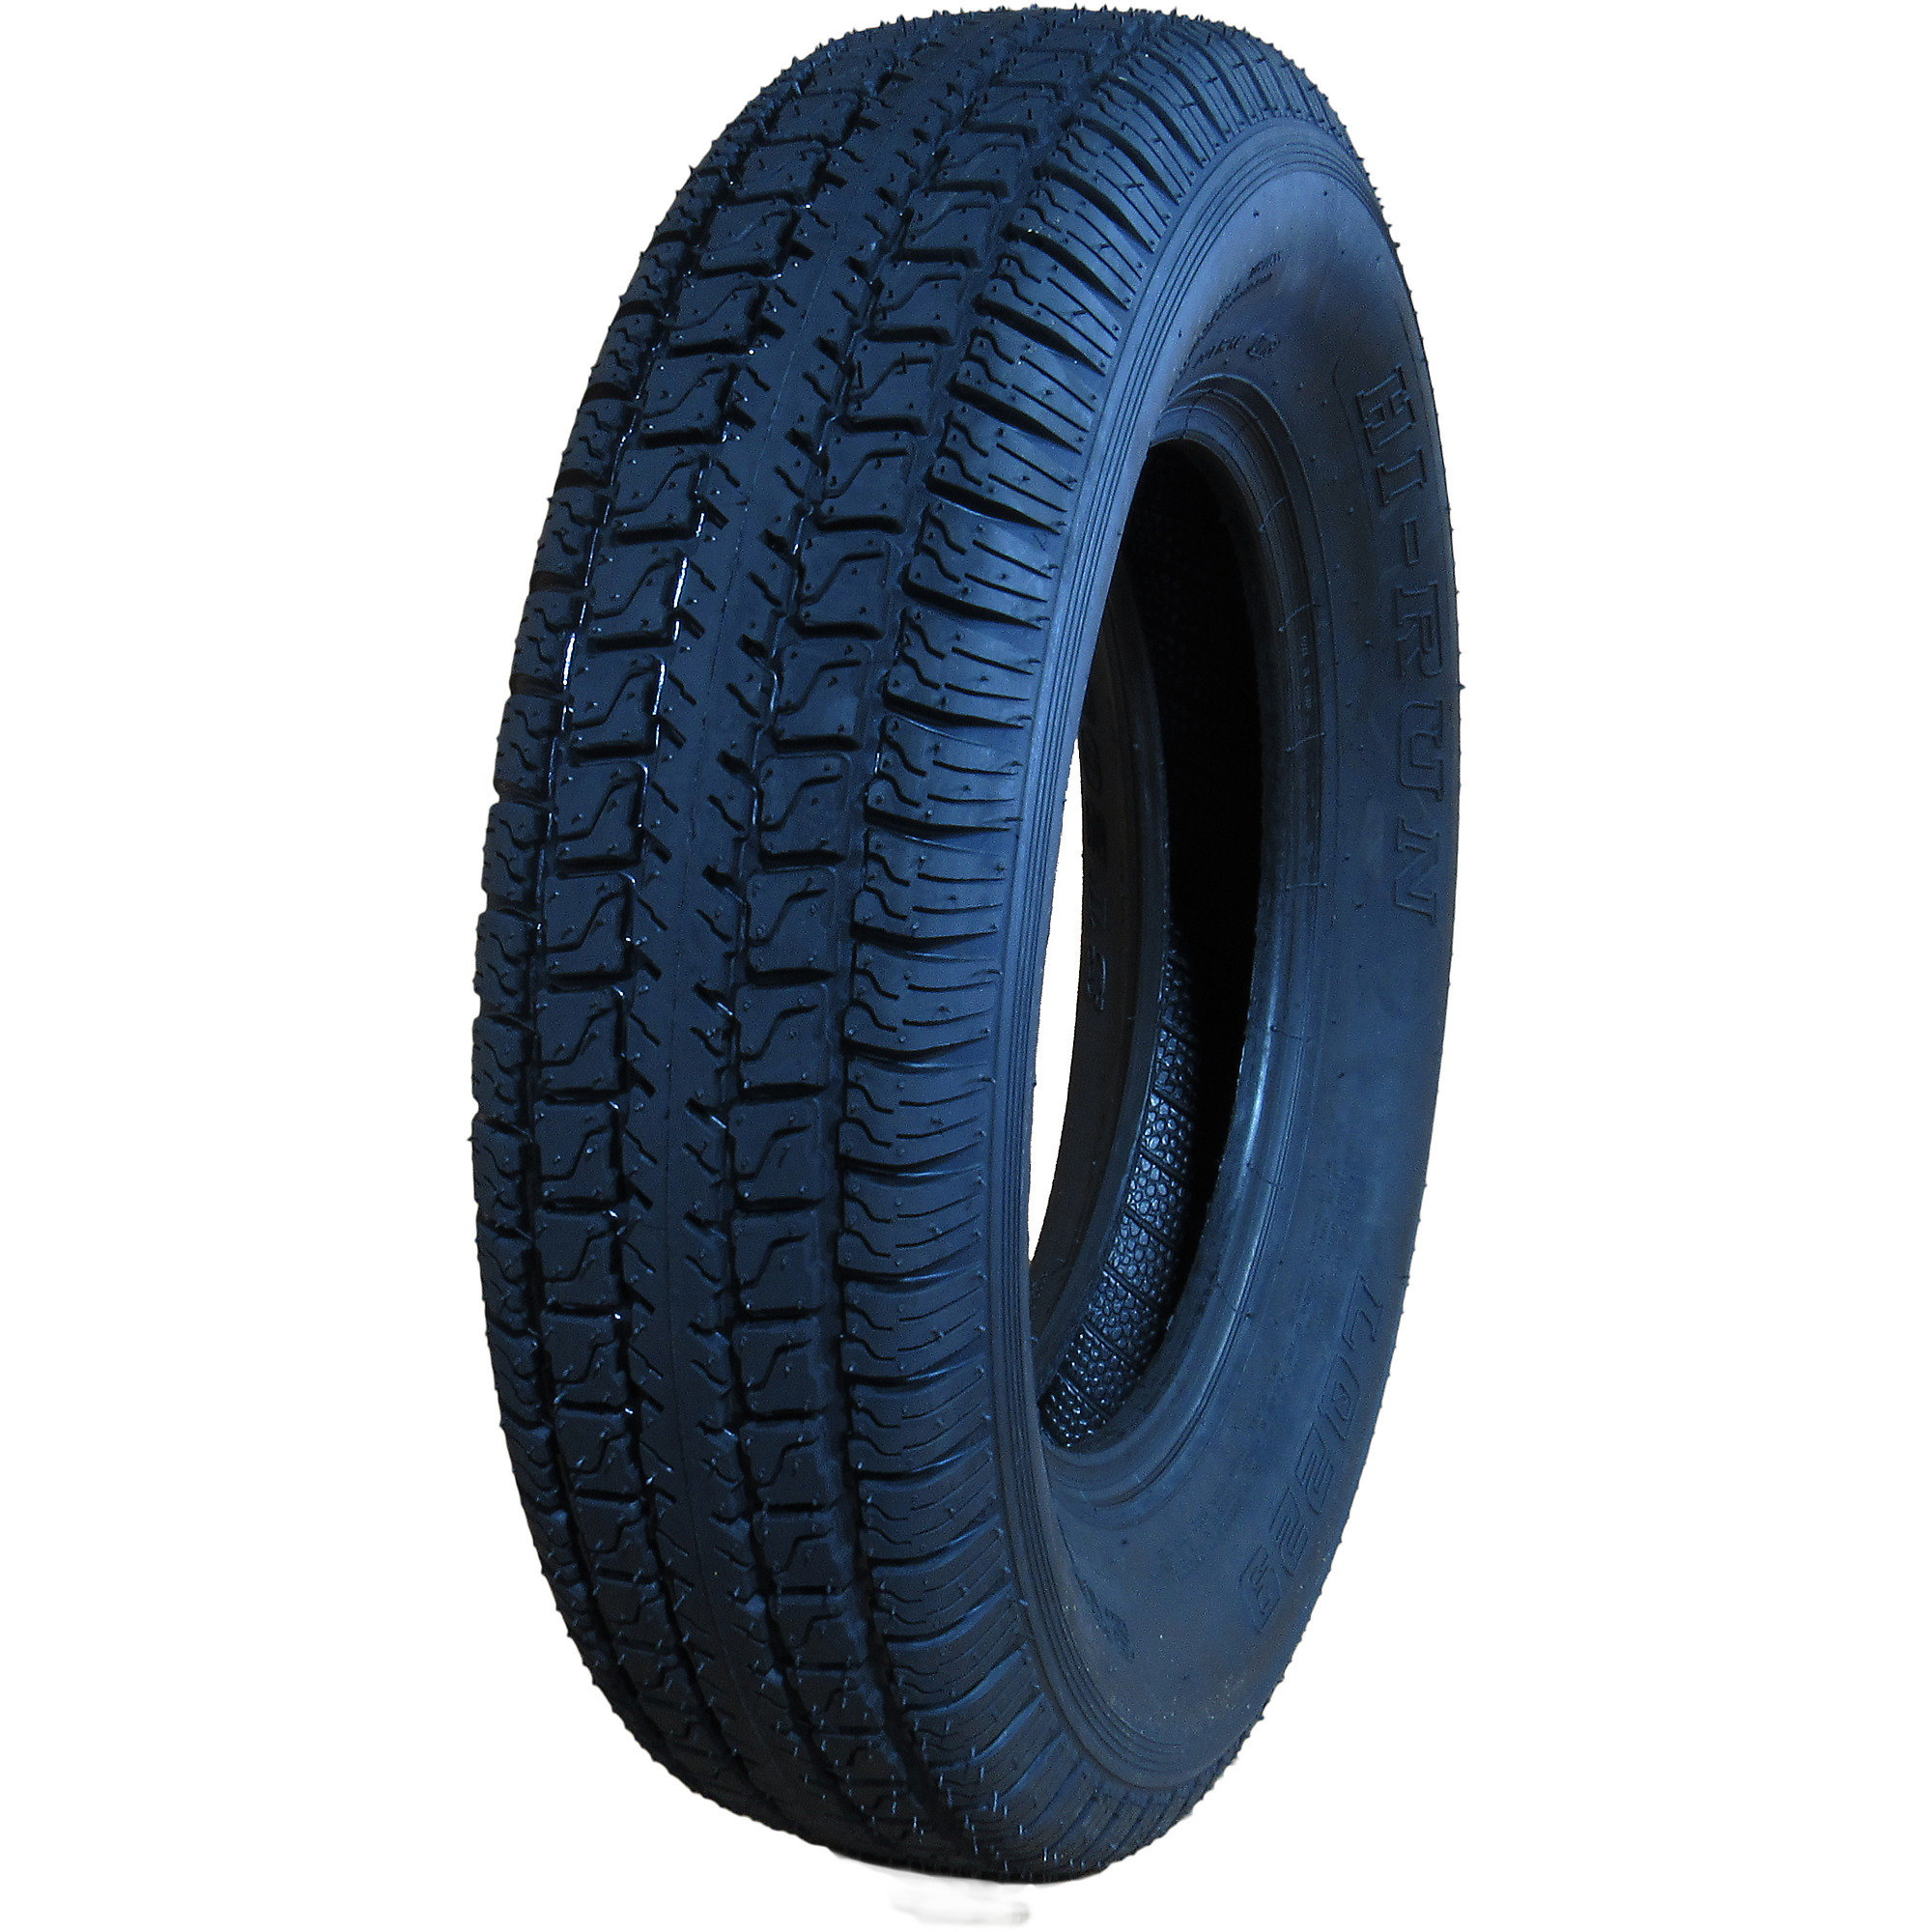 HI-RUN, Highway Trailer Tire, Bias-ply, Tire Size ST205/75D14 Load Range Rating C, Model LZ1004